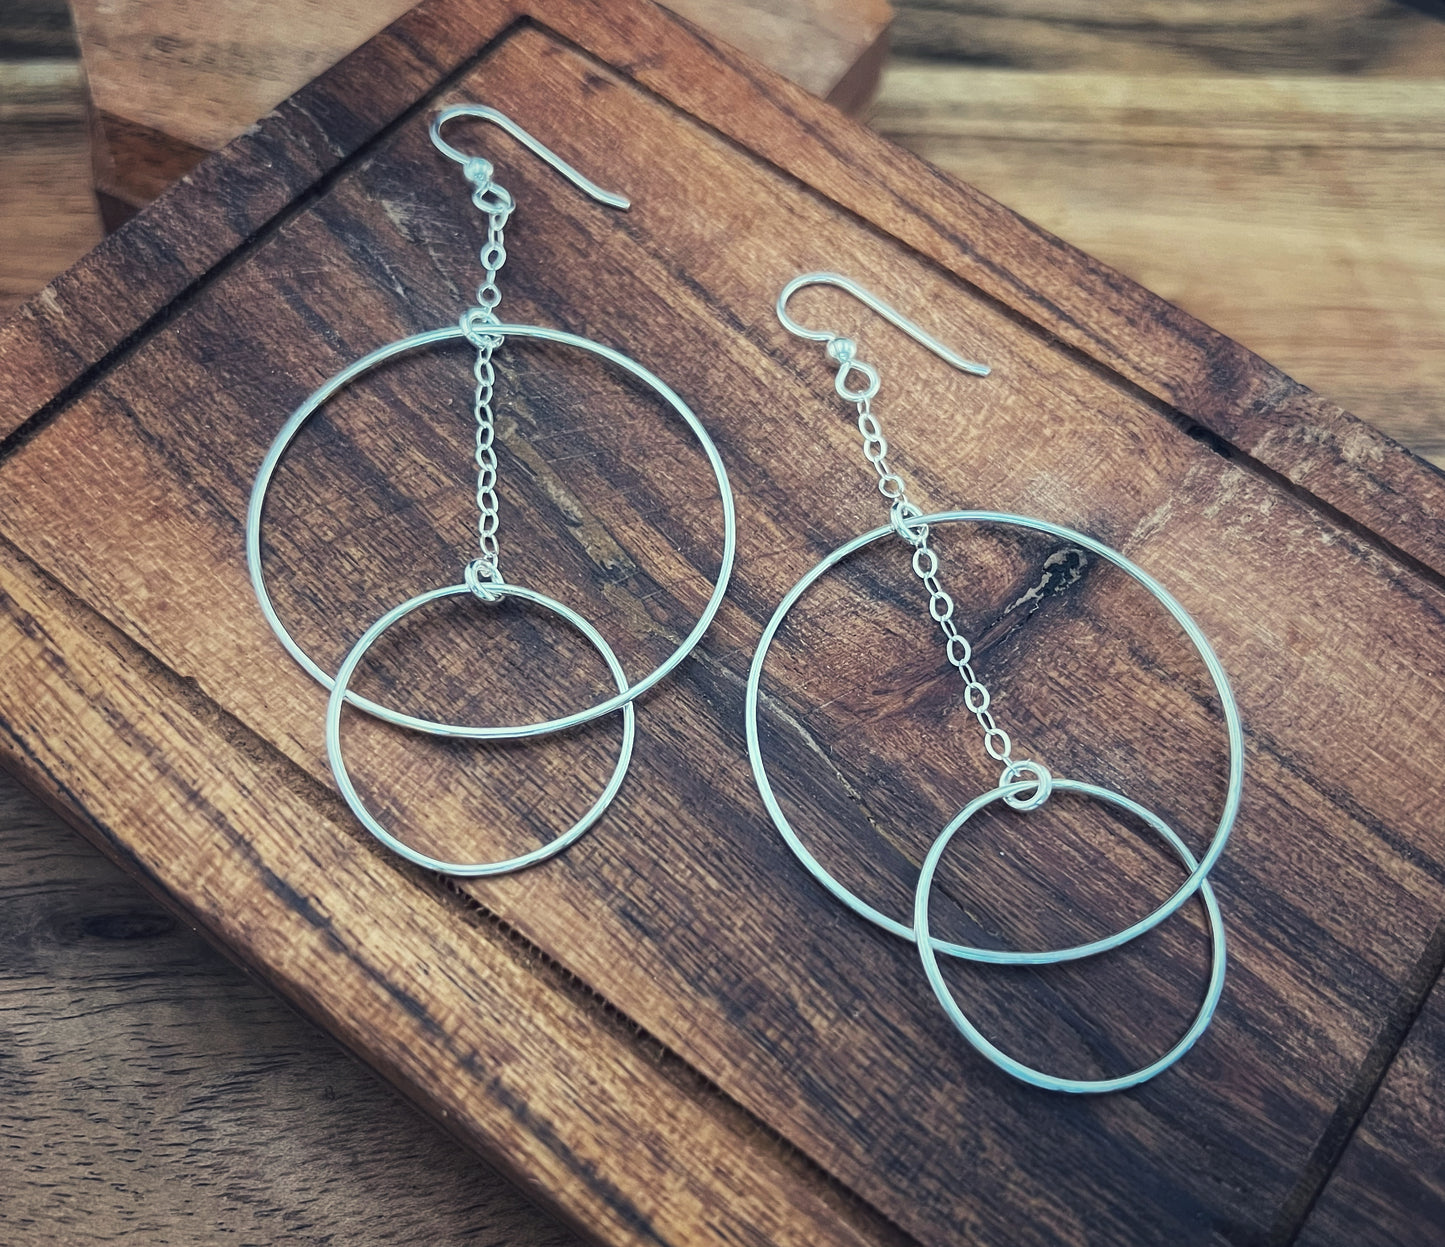 Forged sterling double hoop earrings